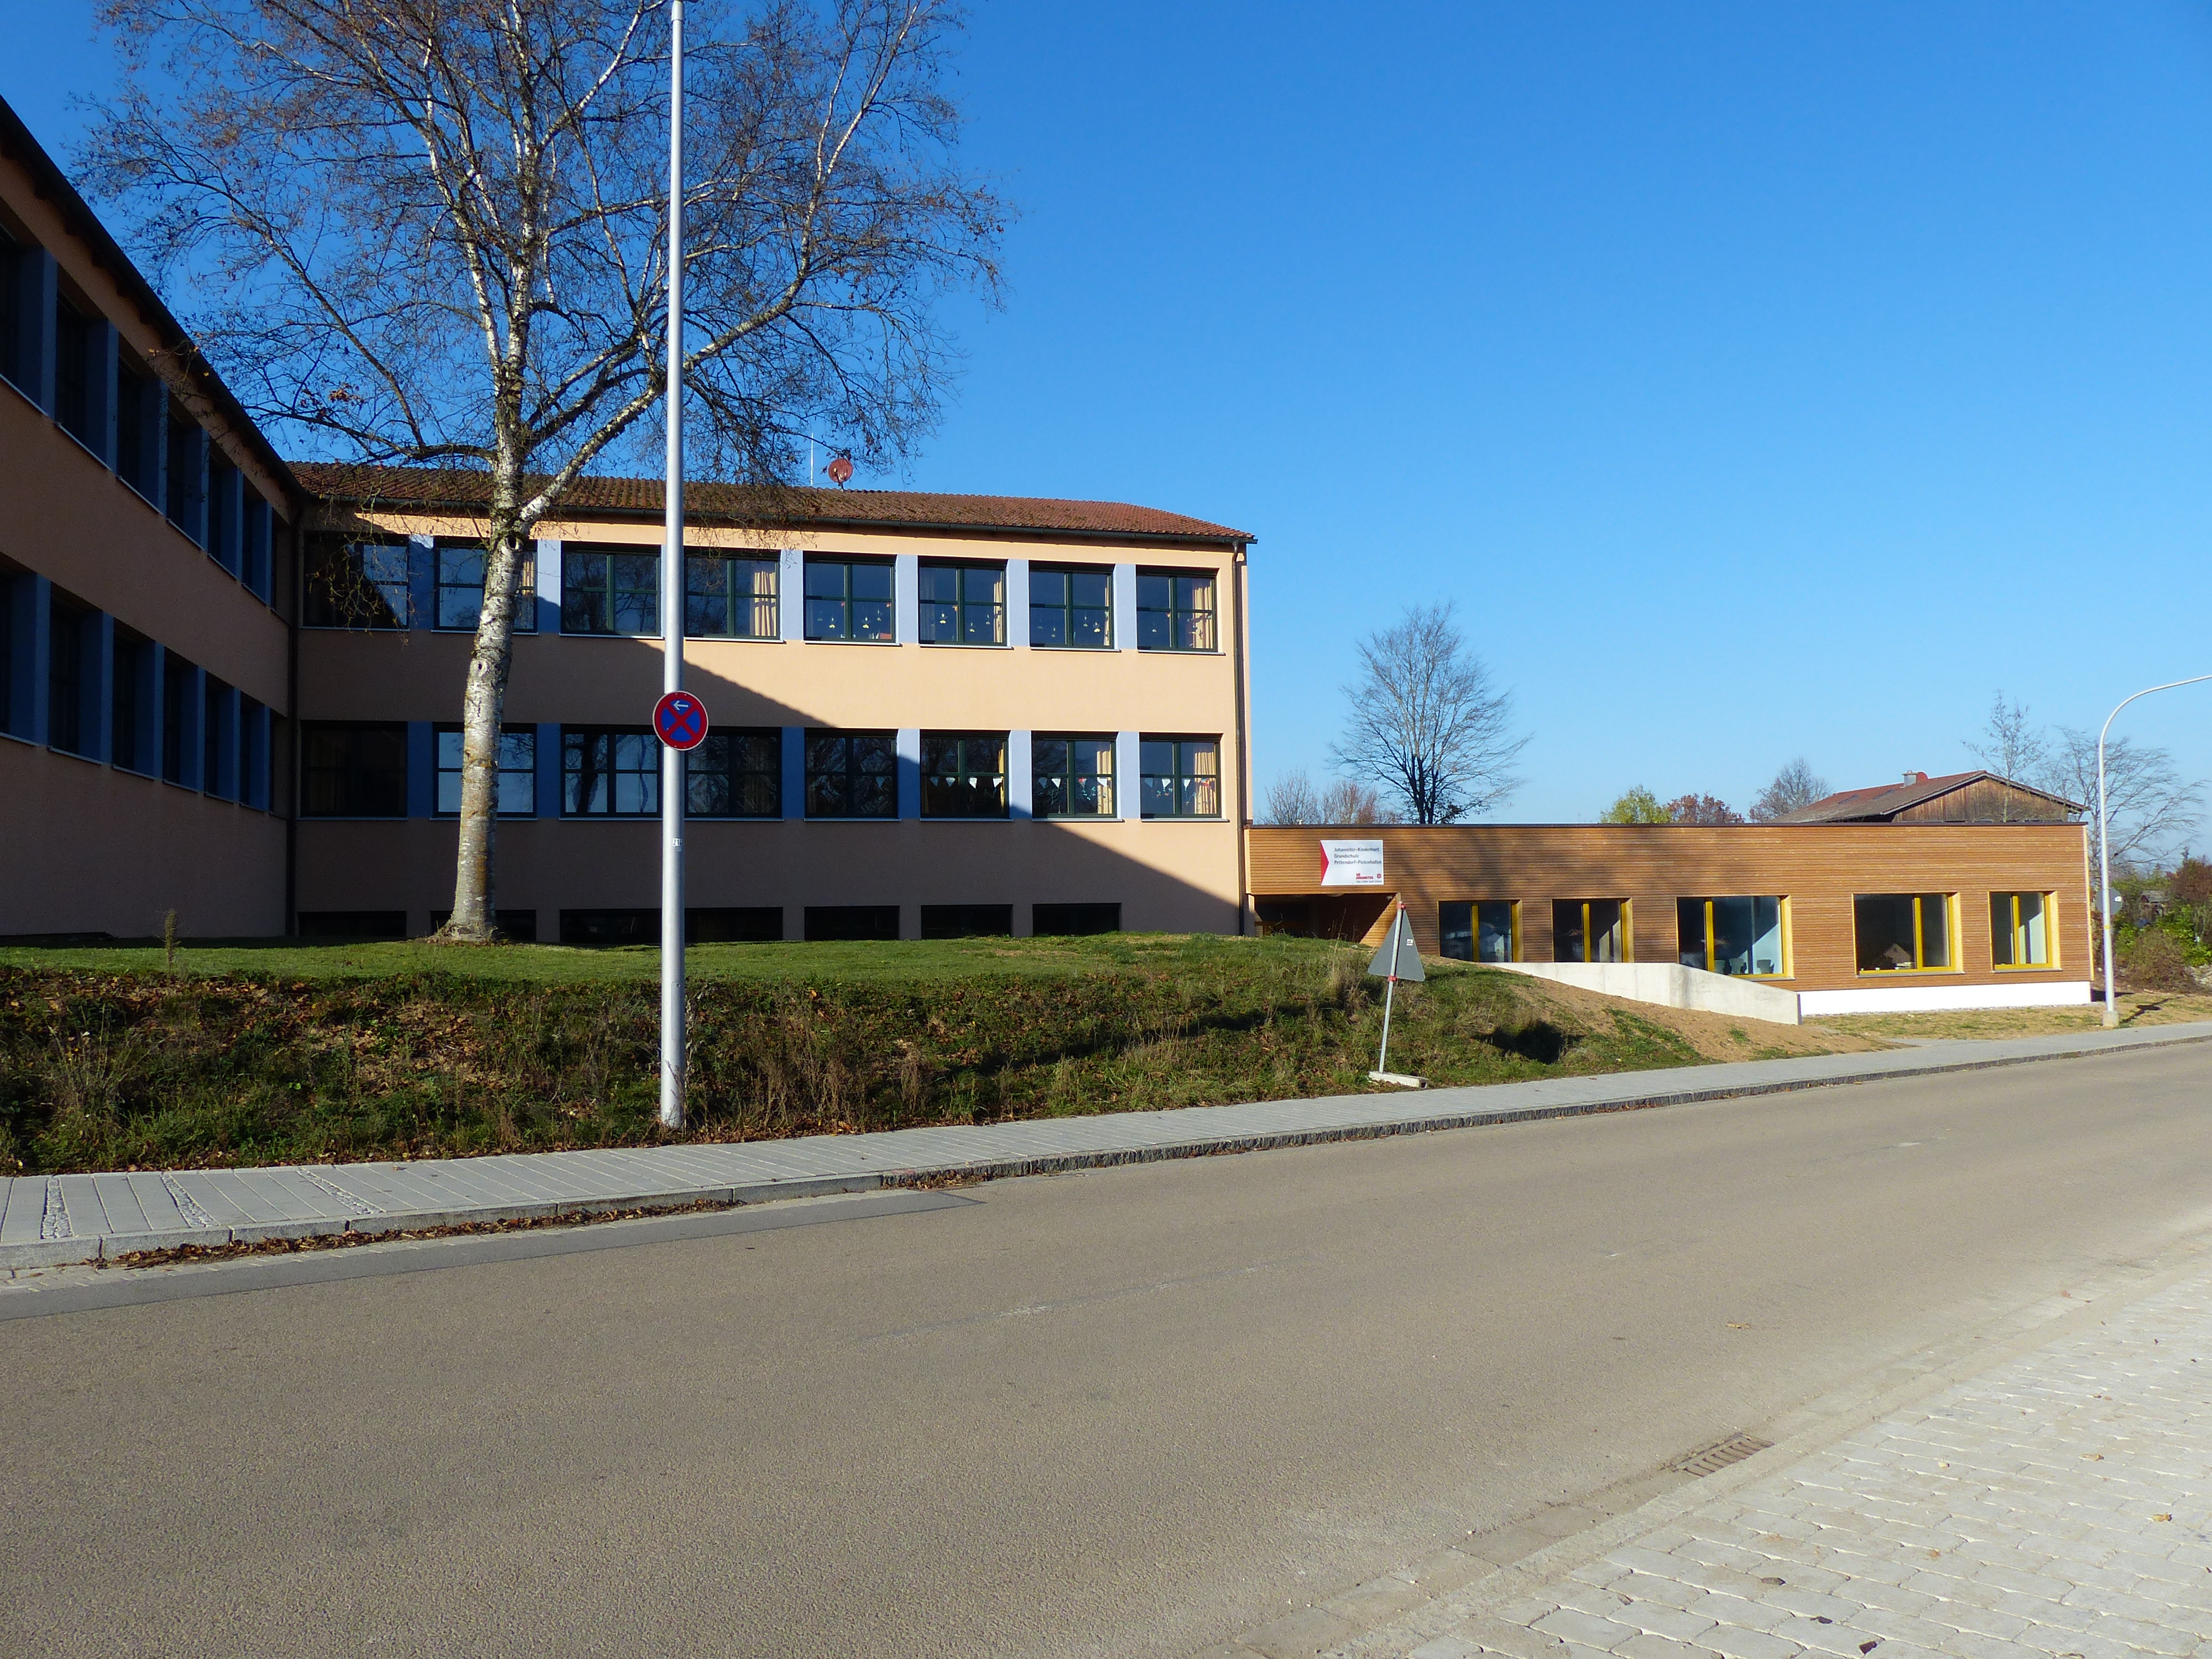 Foto zeigt die Grundschule mit Kinderhort in Pettendorf